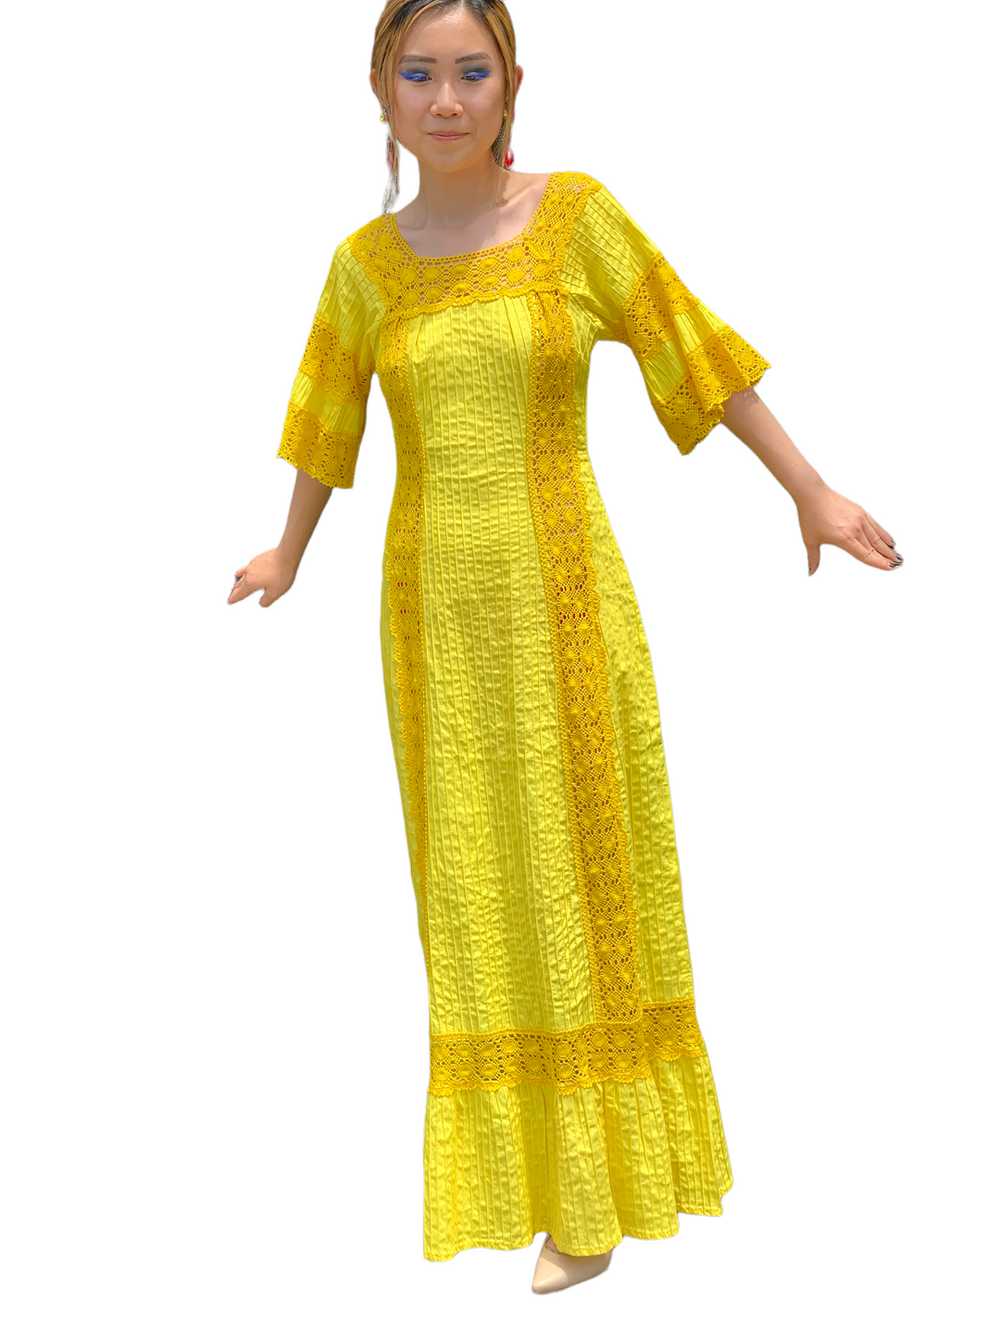 Vintage Yellow Lace Traditonal Dress - image 3